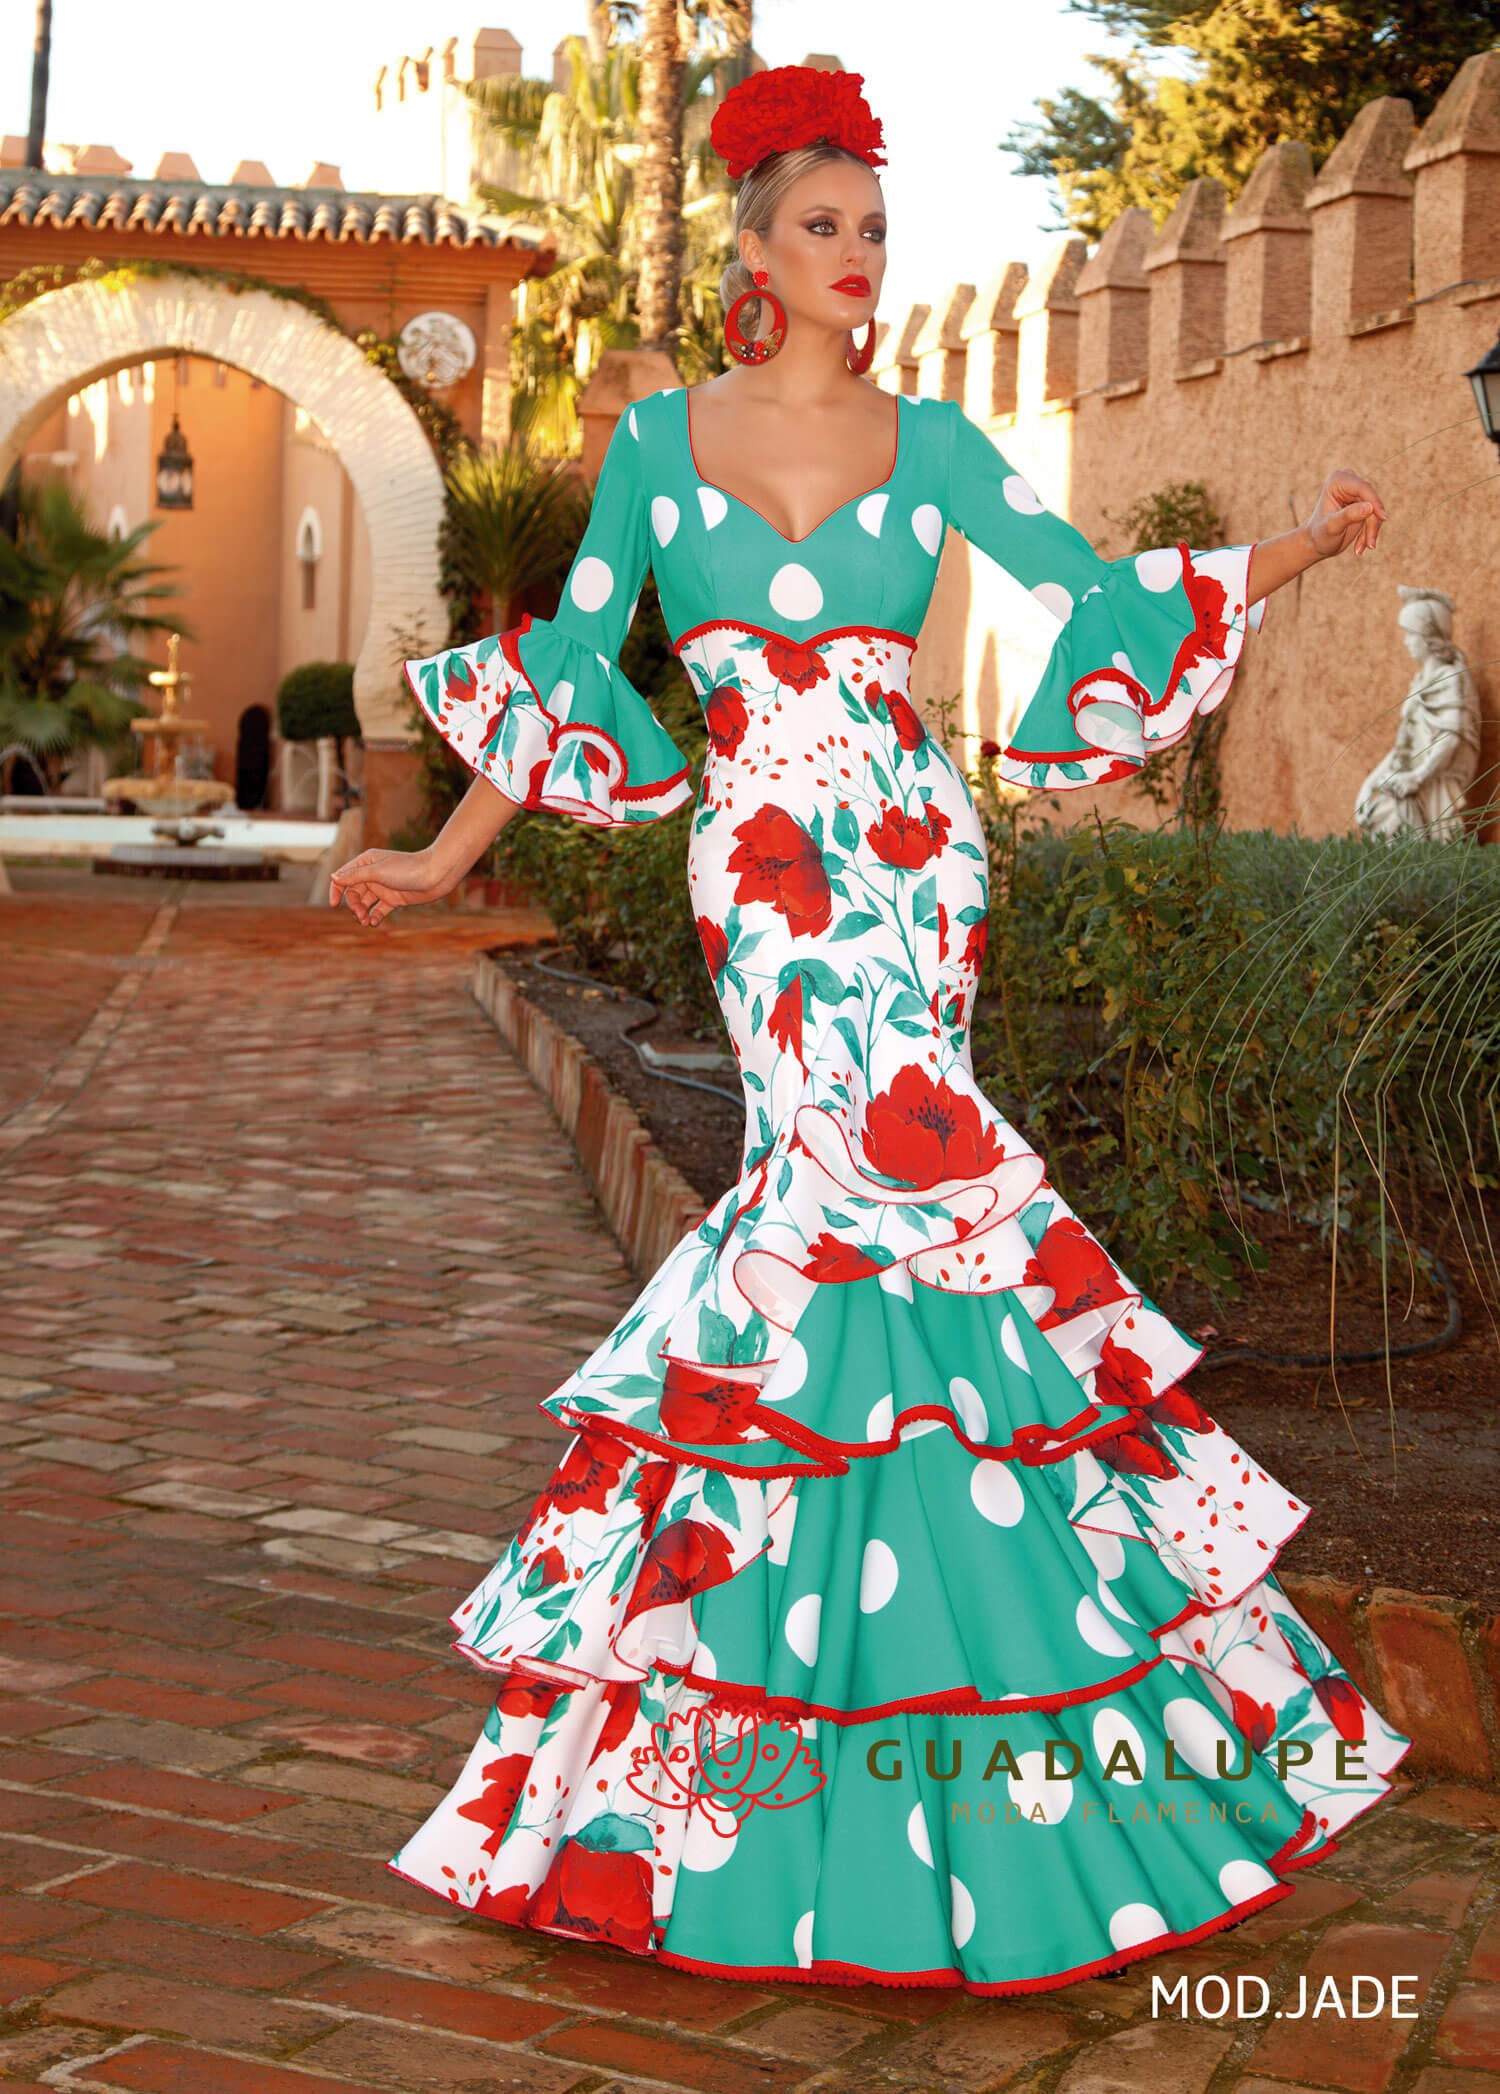 Moda flamenca nueva